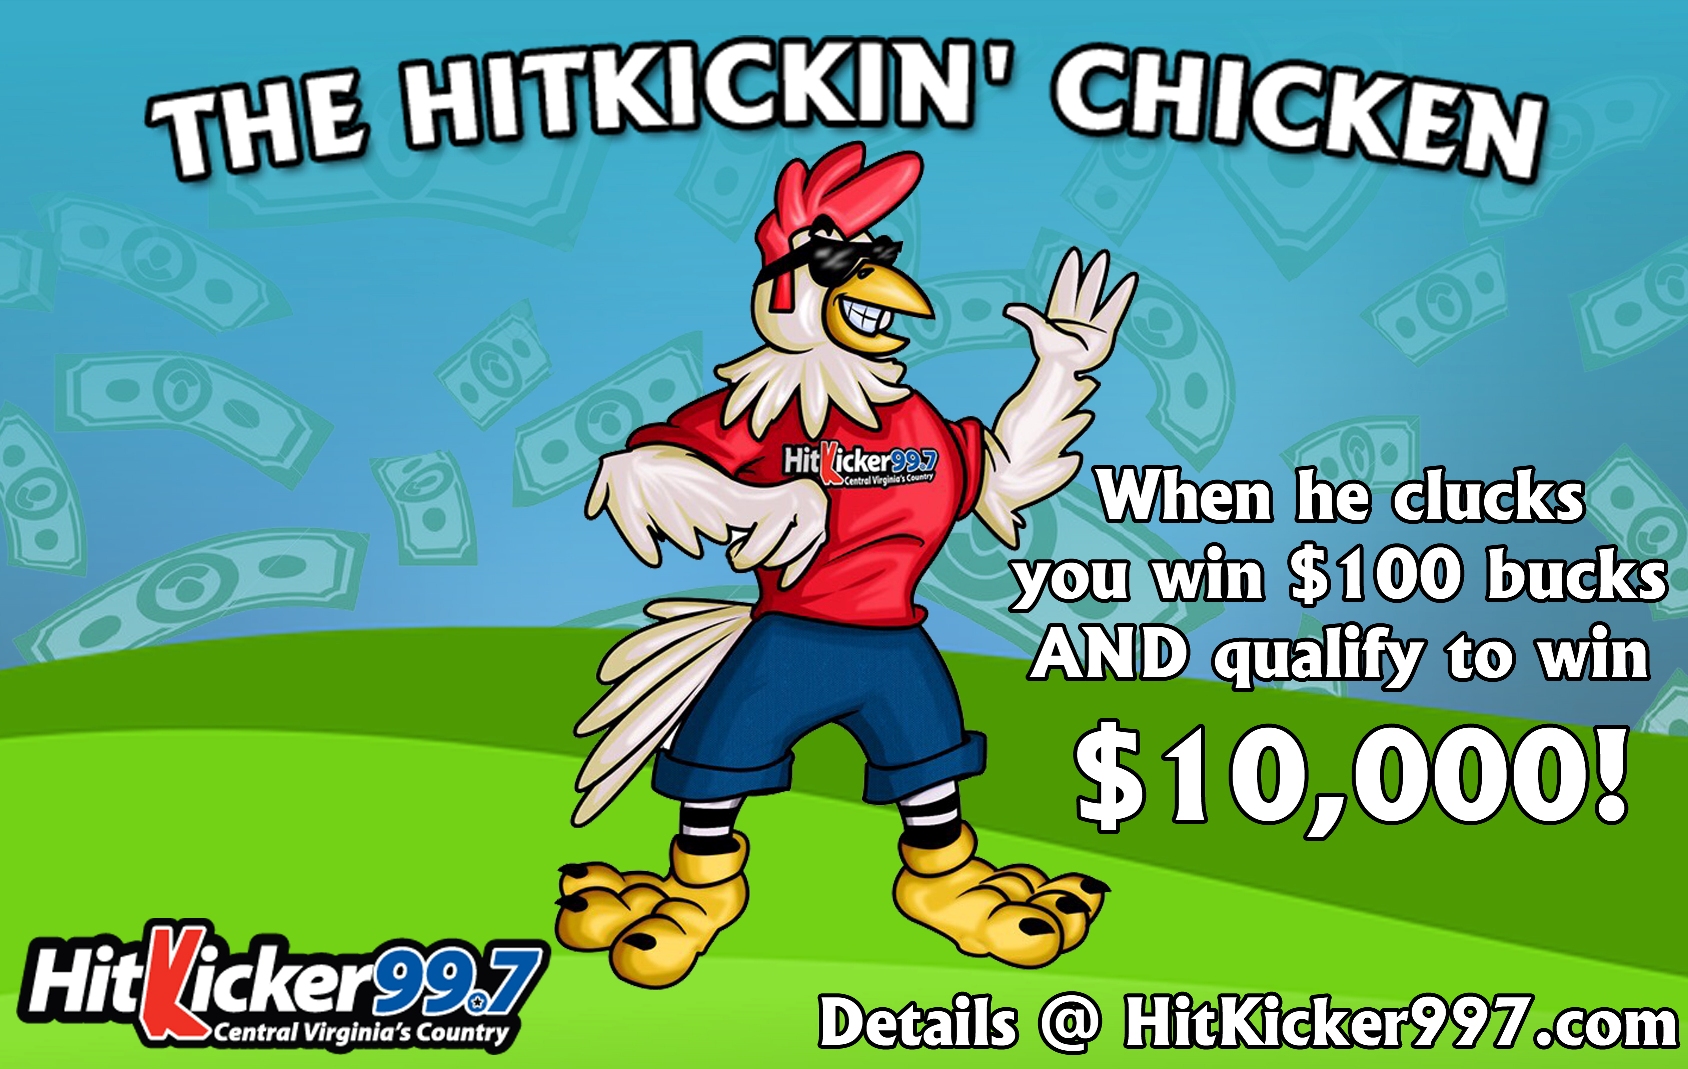 The Hitkickin Chicken Can Make You a Ten Thousand Dollar Winner